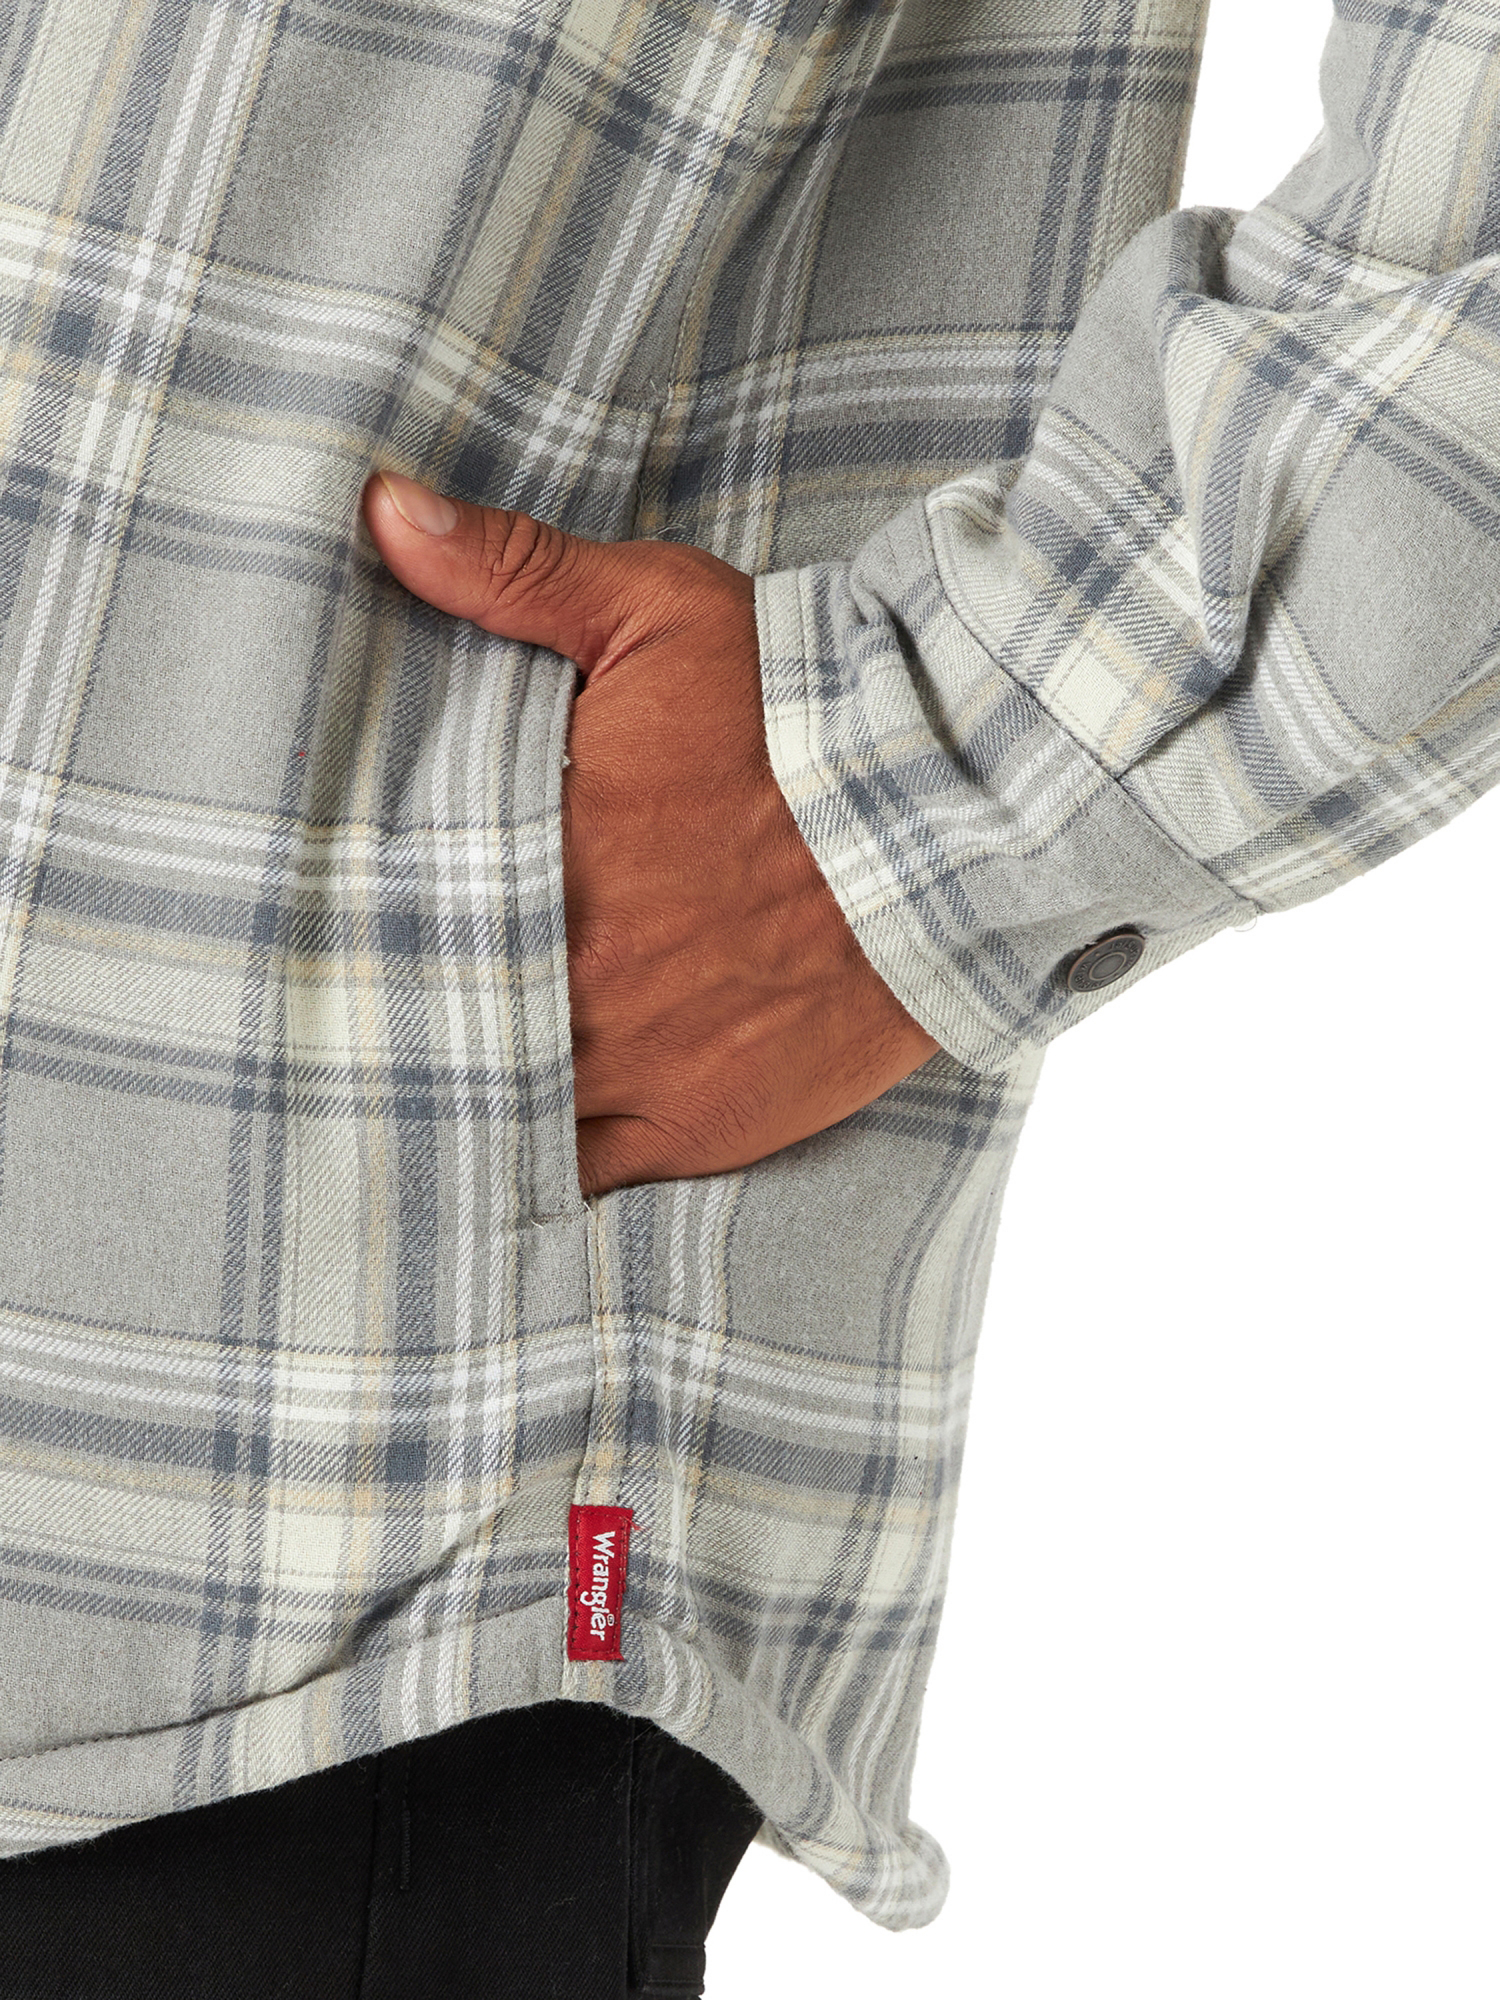 Wrangler Men's Heavyweight Sherpa-Lined Shirt Jacket - image 4 of 5